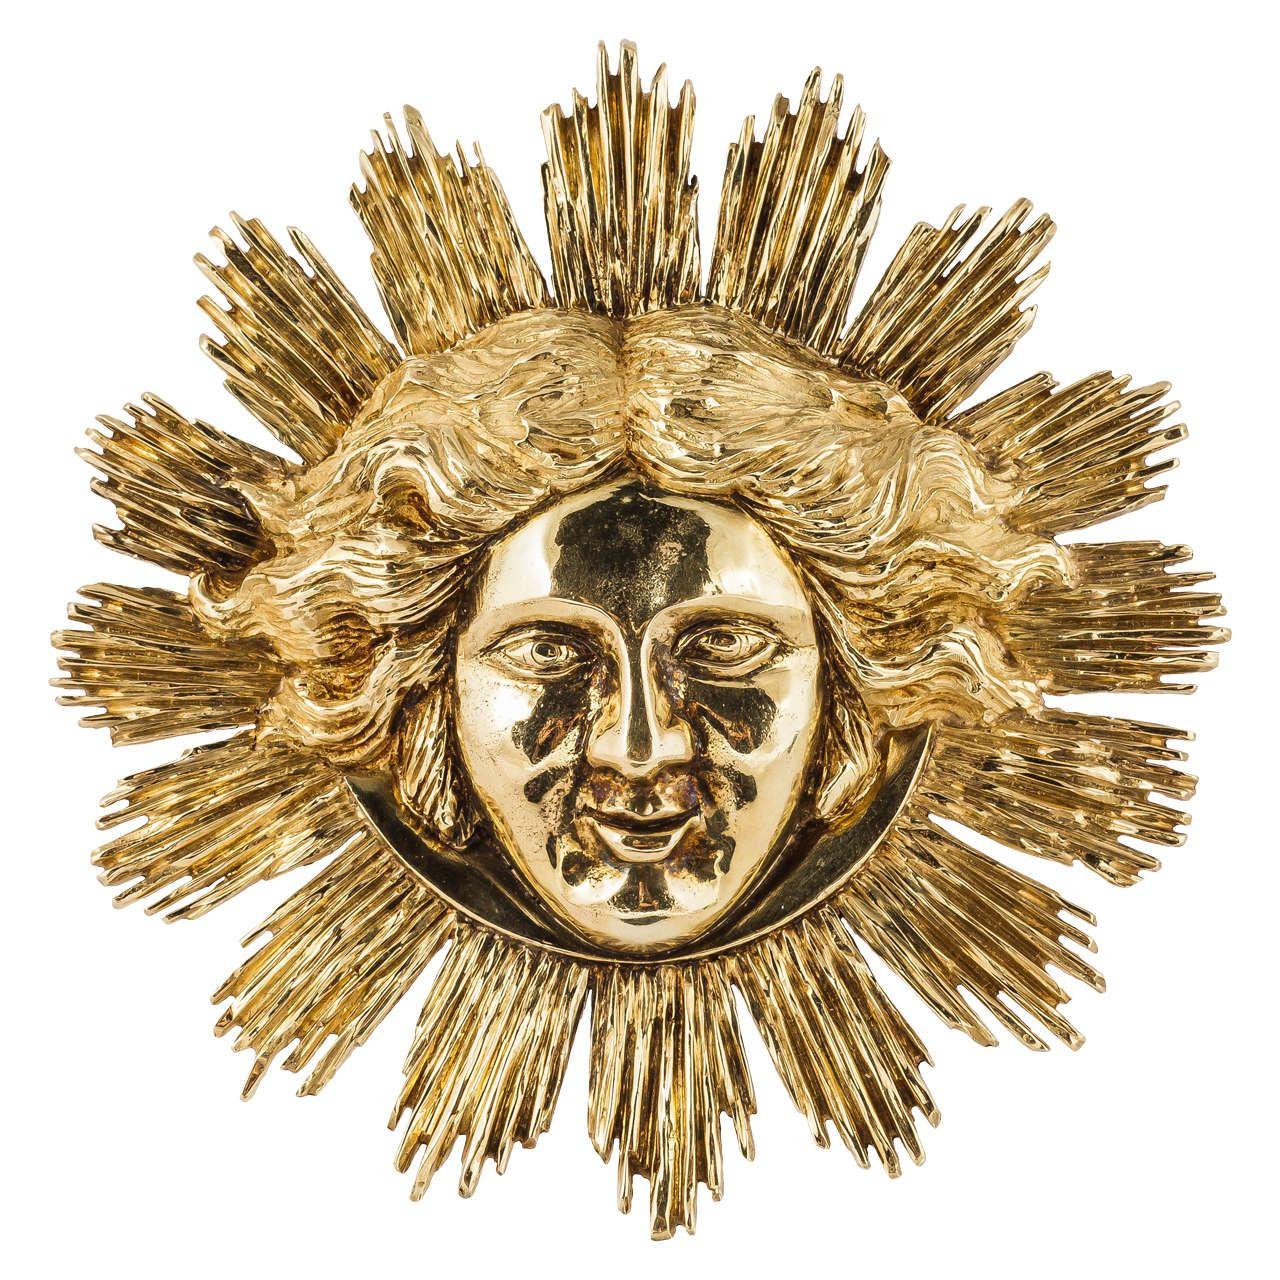 French Gold Sun Logo - Gold Apollo Sun King Pendant For Sale at 1stdibs